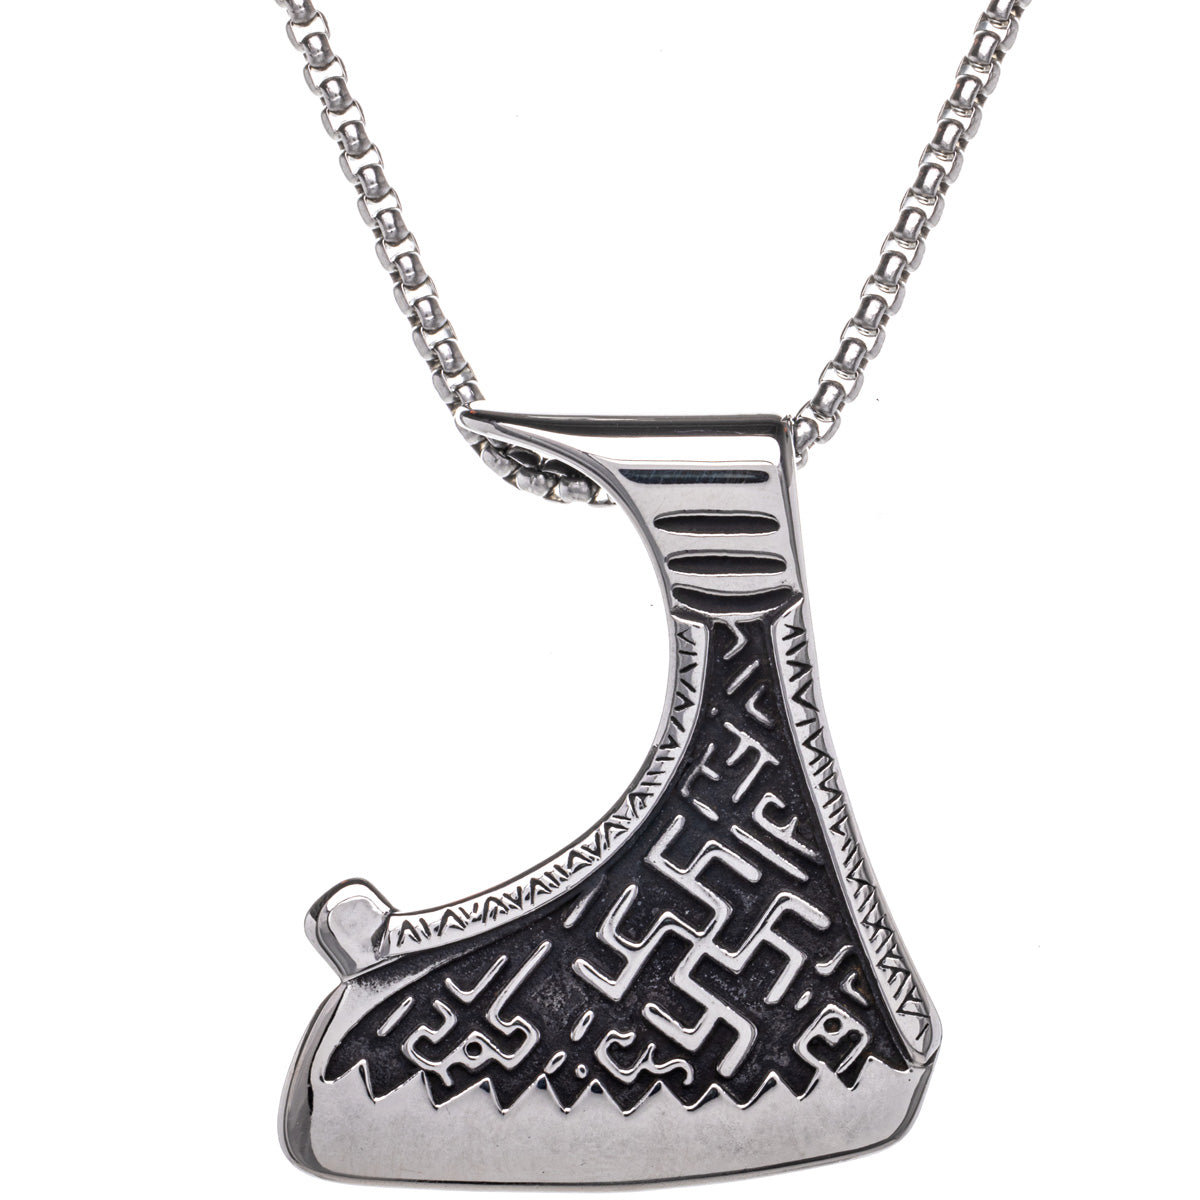 Viking dagger pendant necklace (Steel 316L)